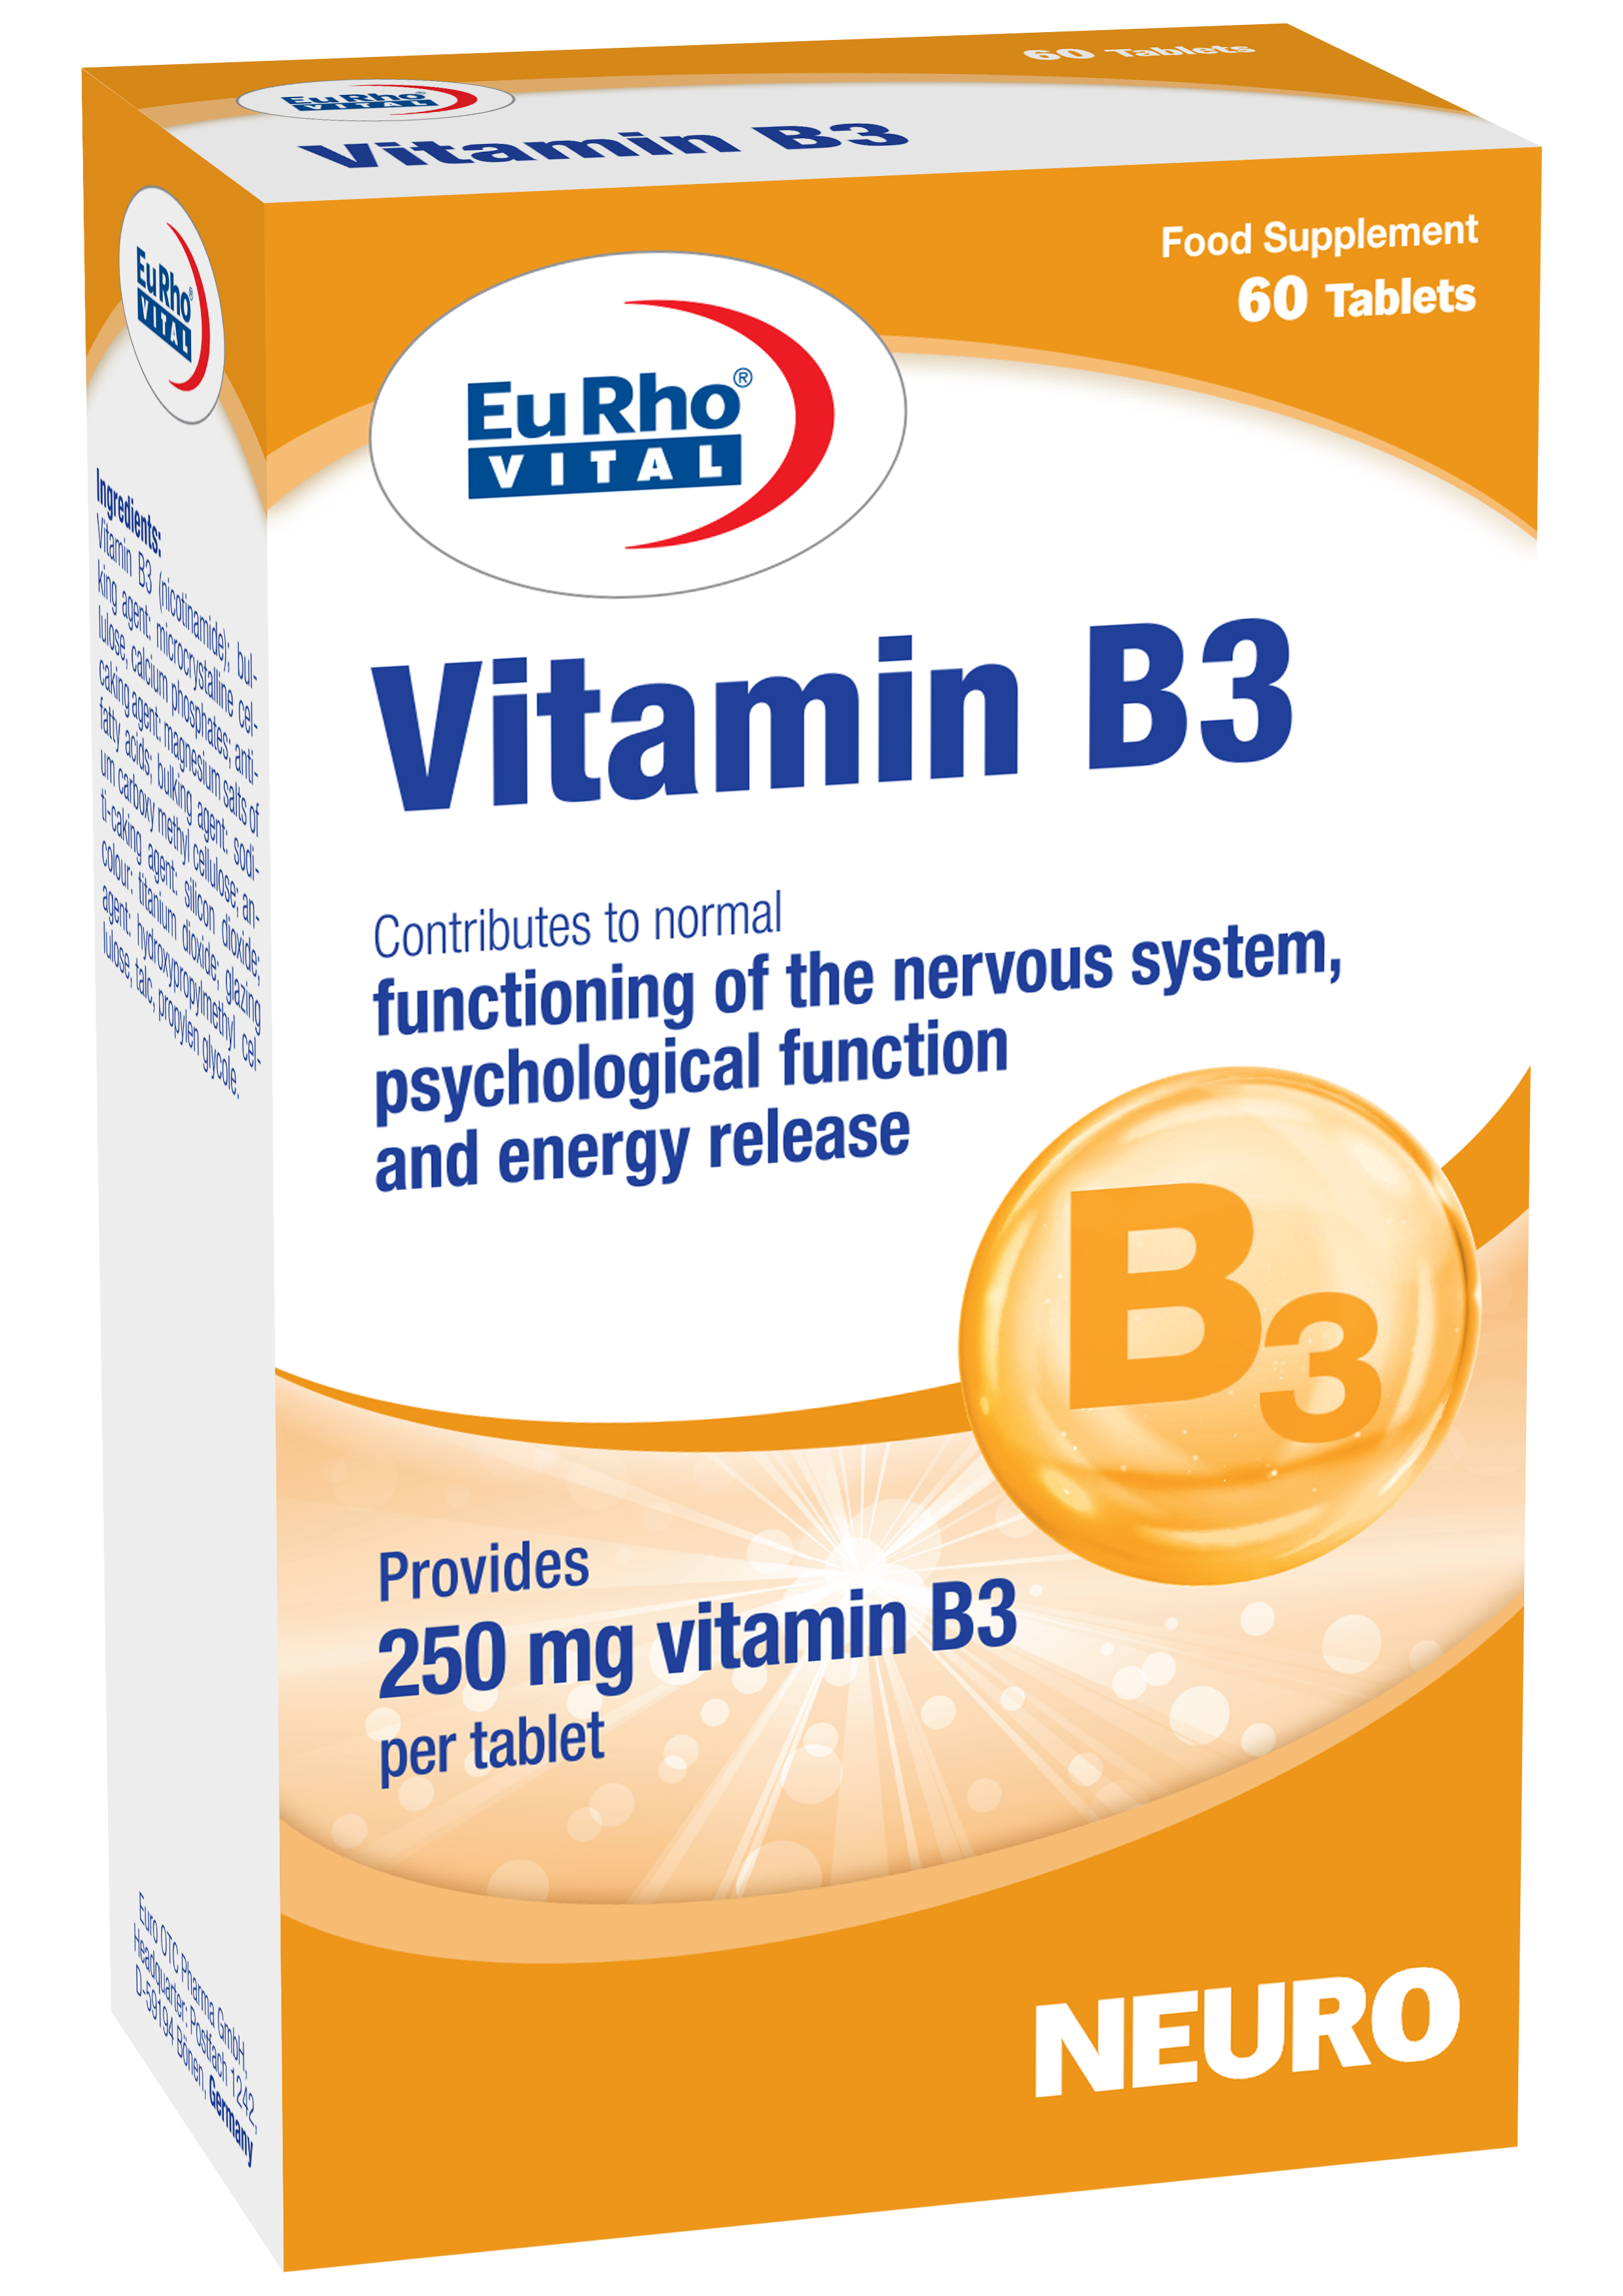 https://hakimanteb.com/wp-content/uploads/2023/02/Vitamin-B3-box.png